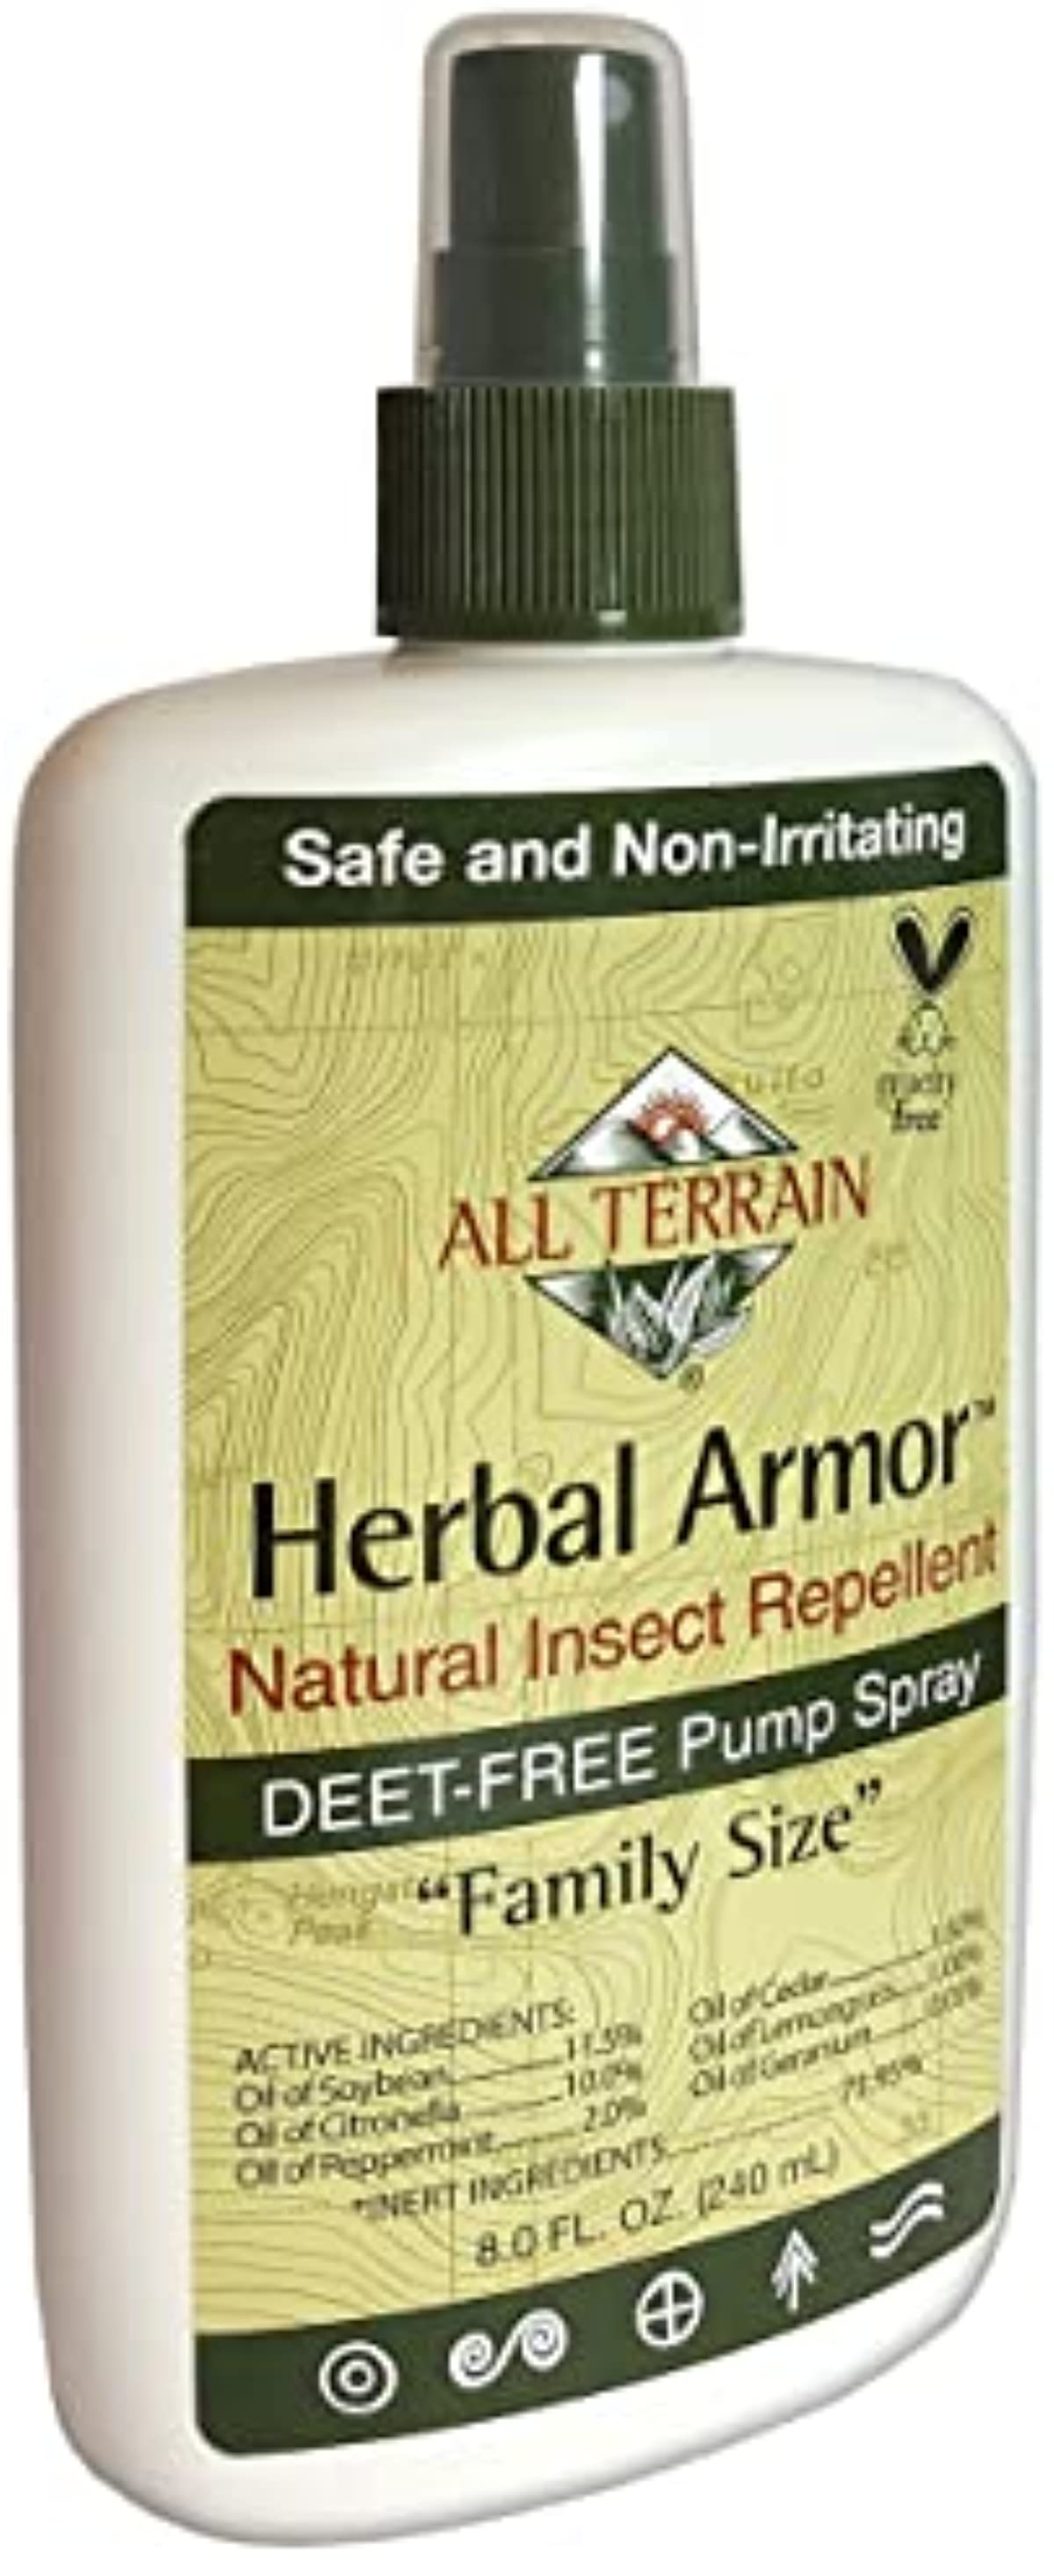 All Terrain Herbal Armor DEET-Free